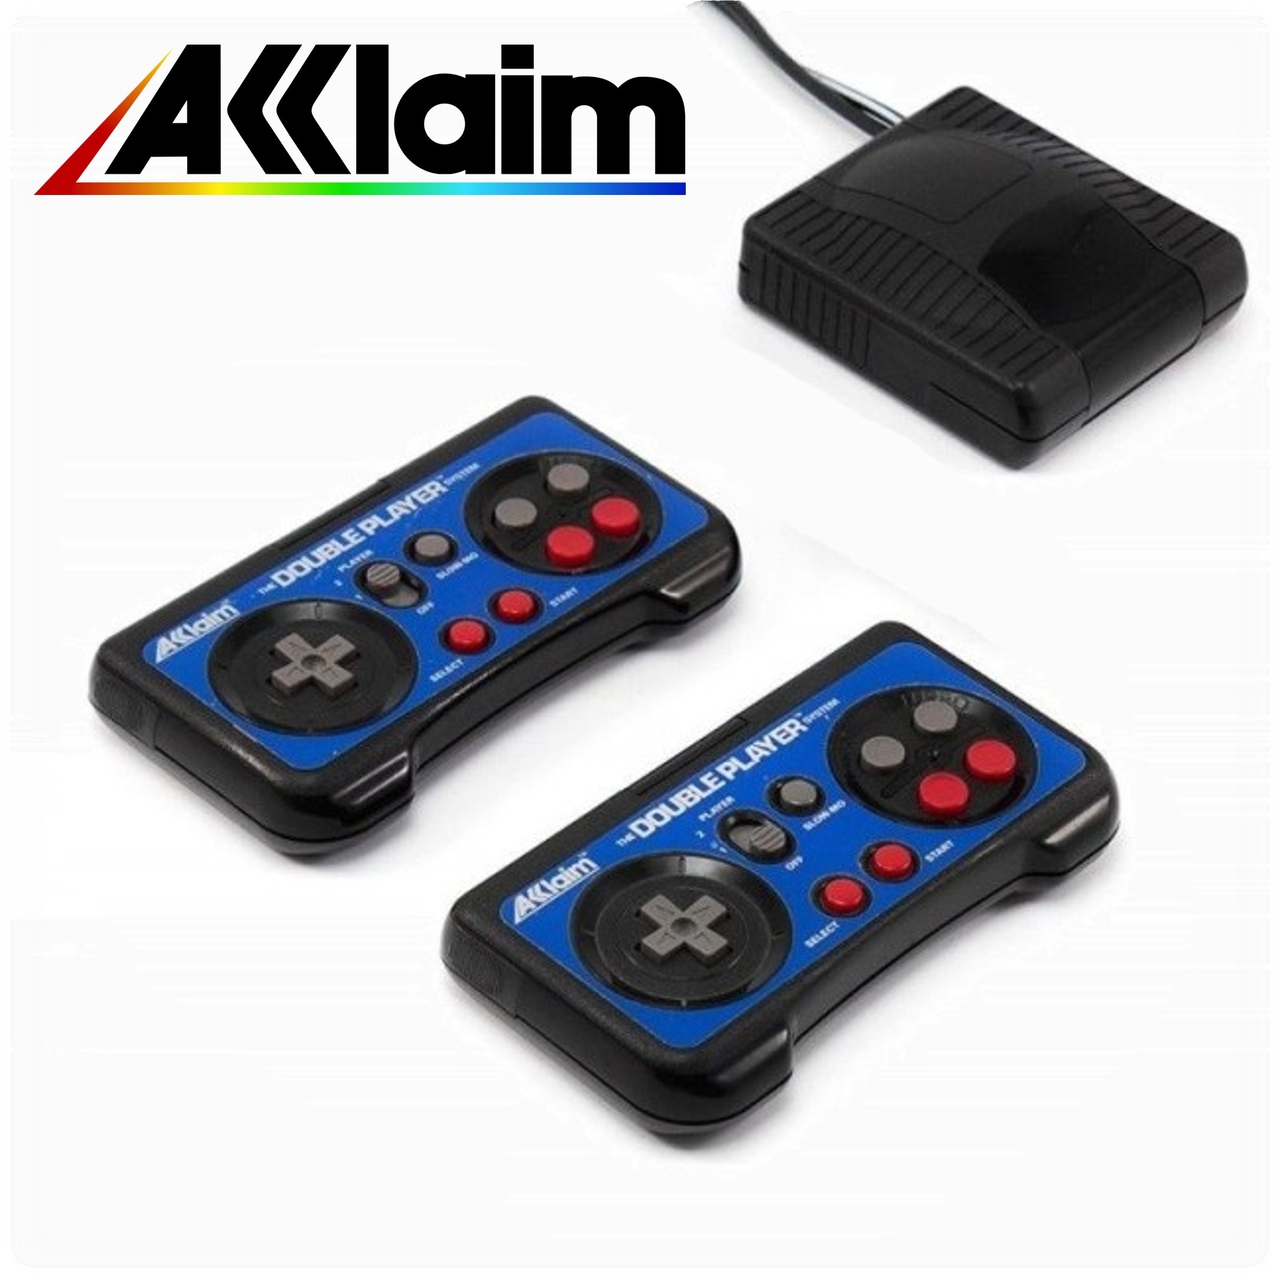 Akklaim Wireless Double Player System - Nintendo NES Hardware